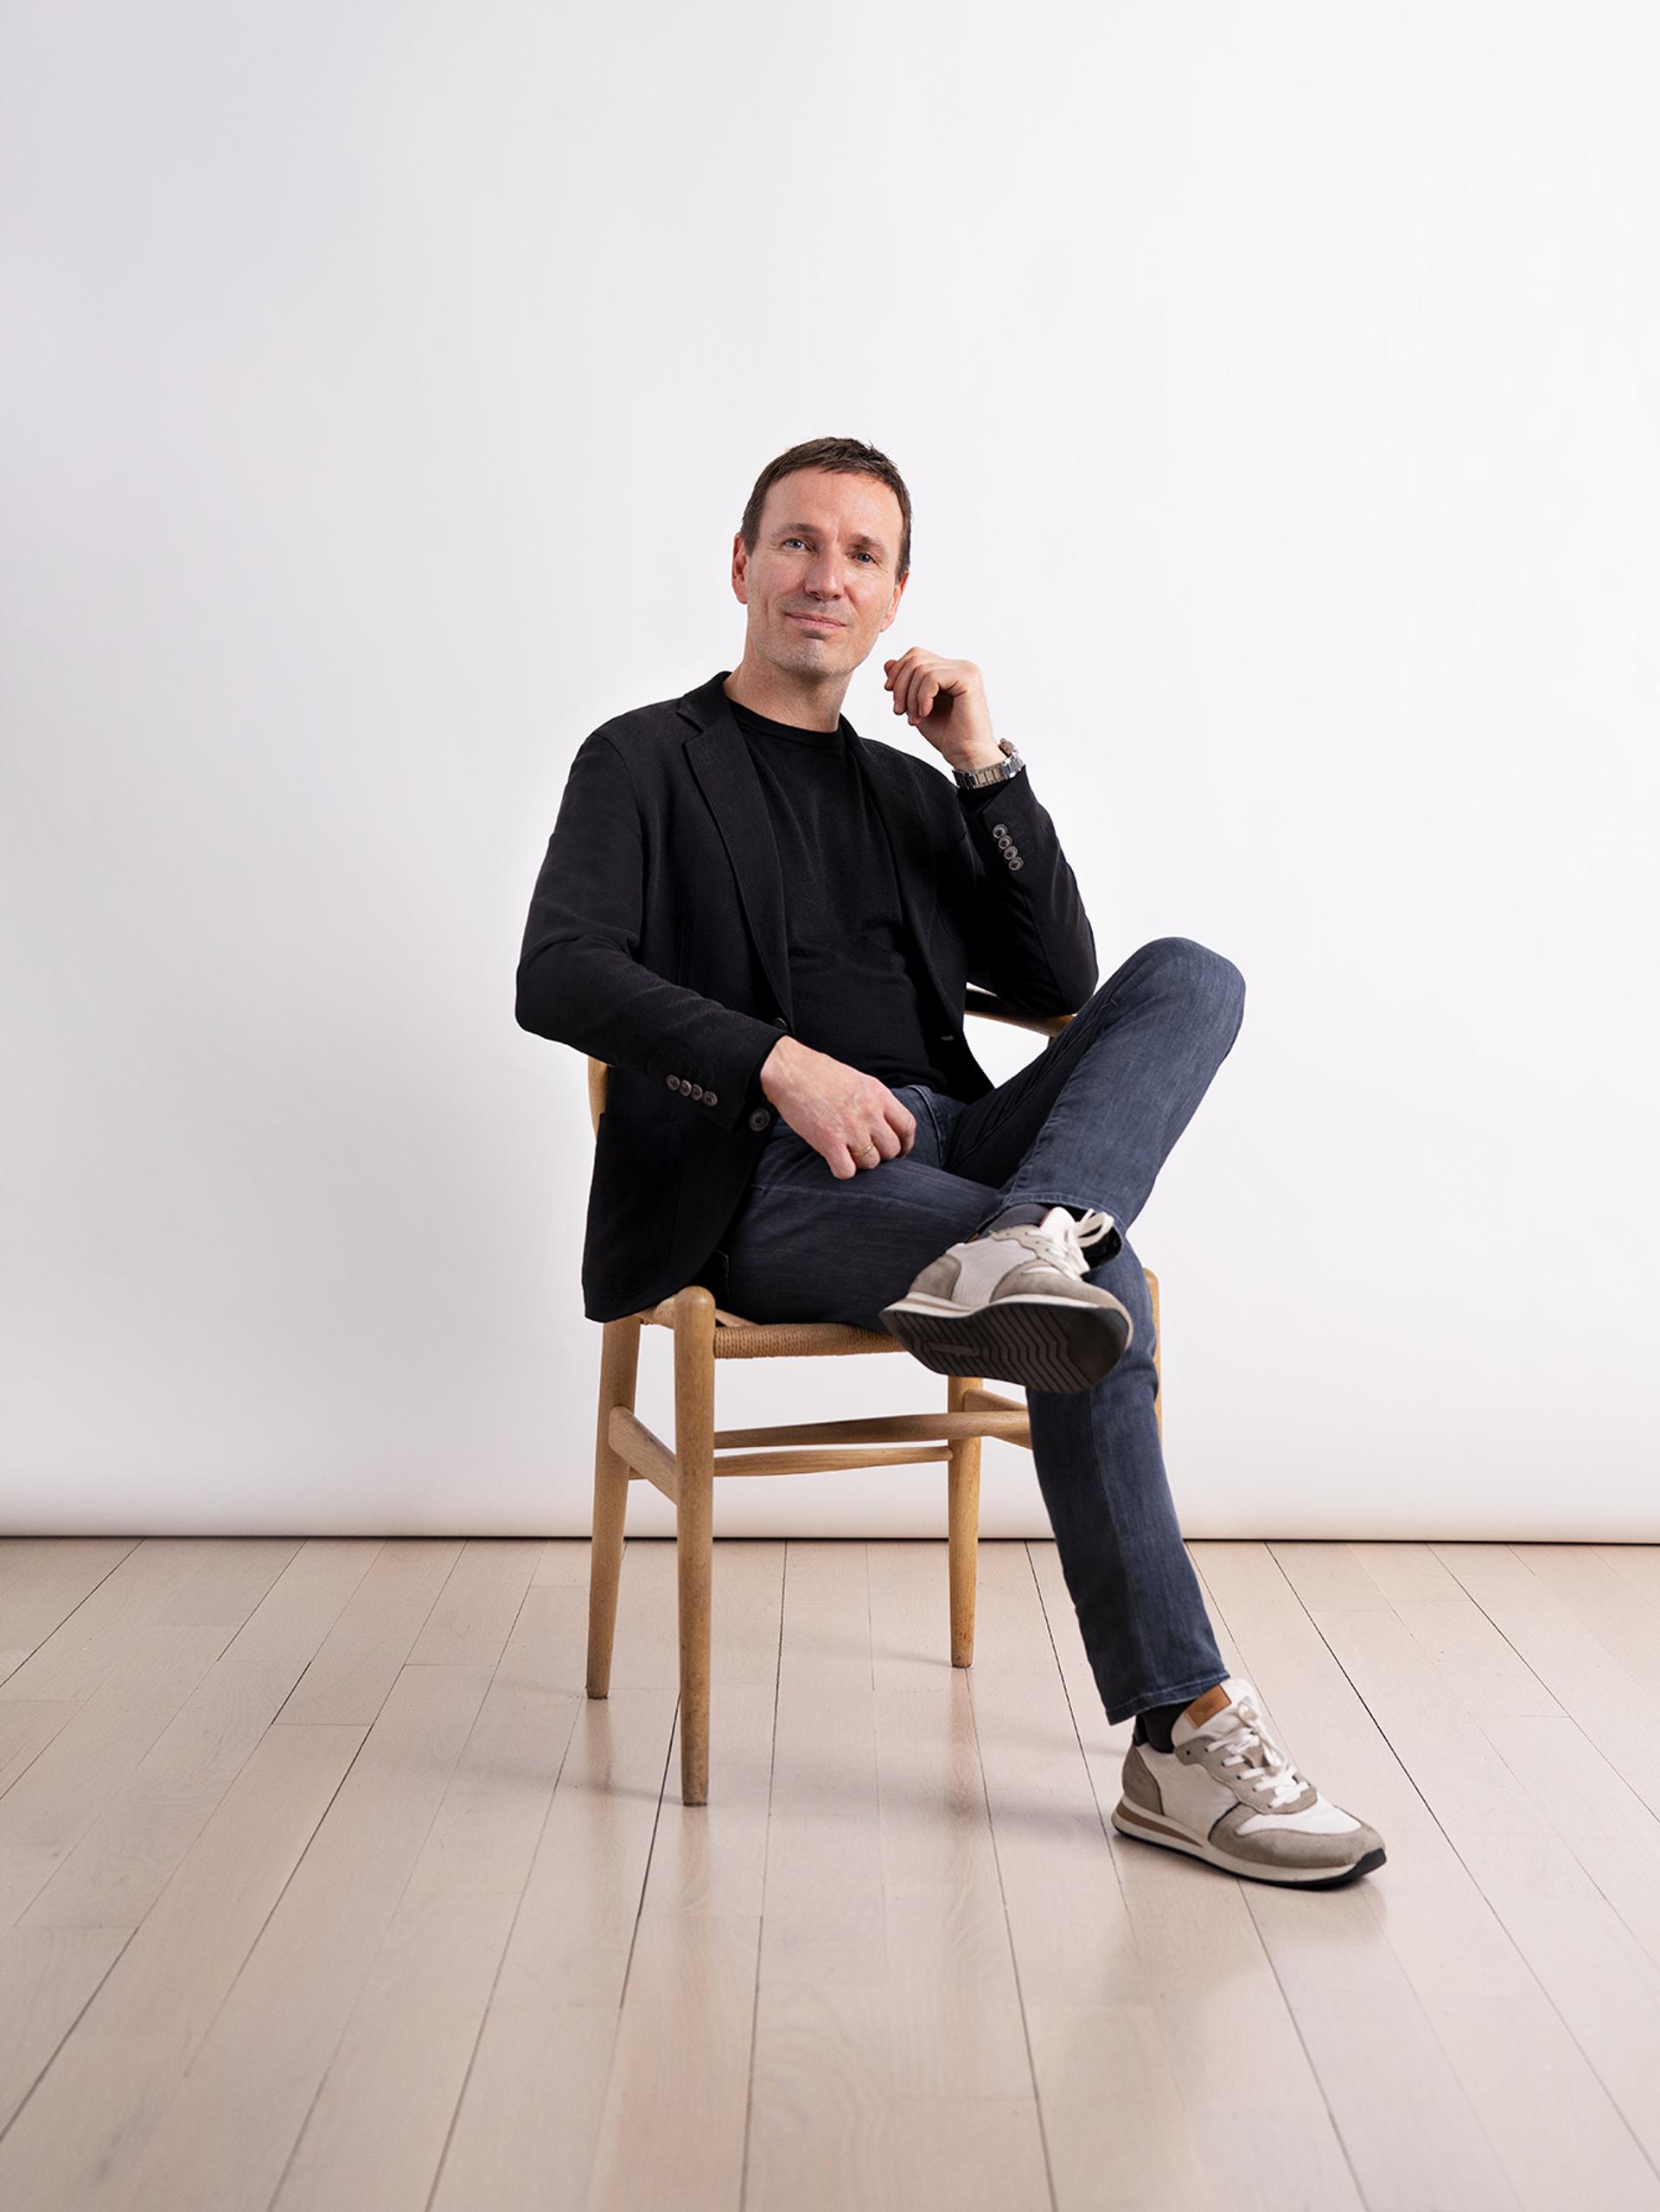 Harklinikken founder Lars Skojoth in chair, legs crossed, portrait image